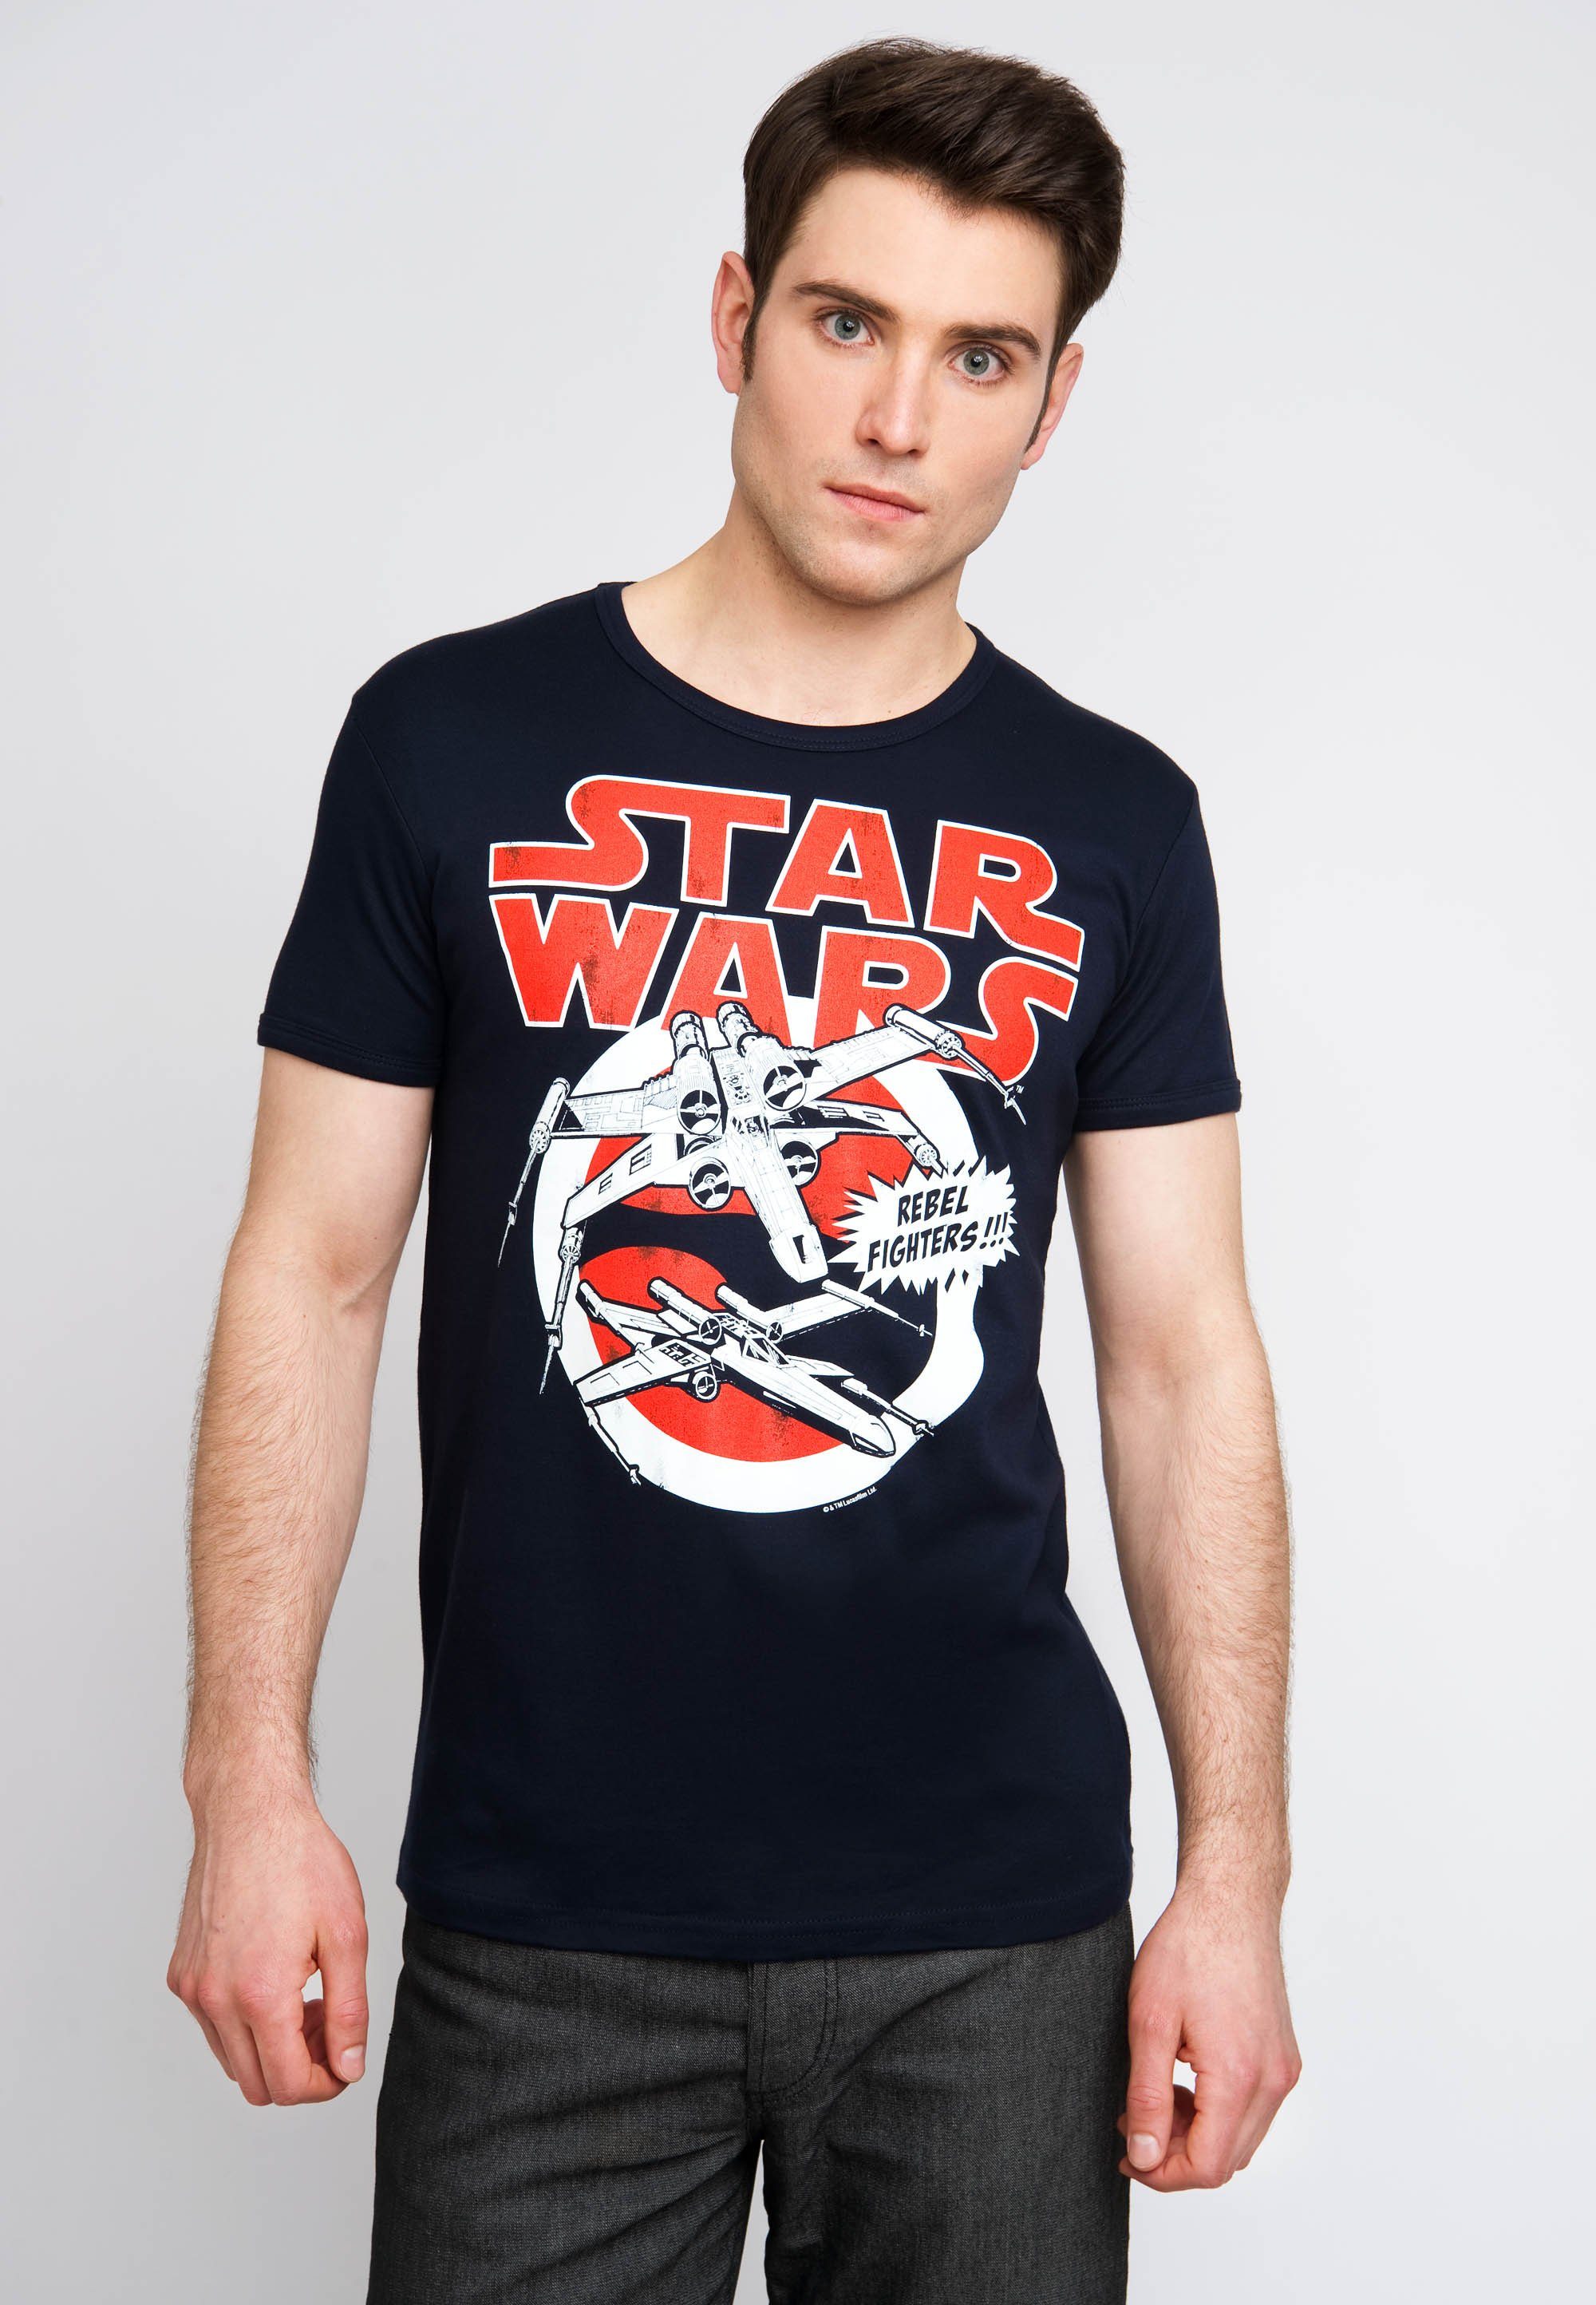 LOGOSHIRT T-Shirt Star Wars X-Wings mit großem Retro-Print